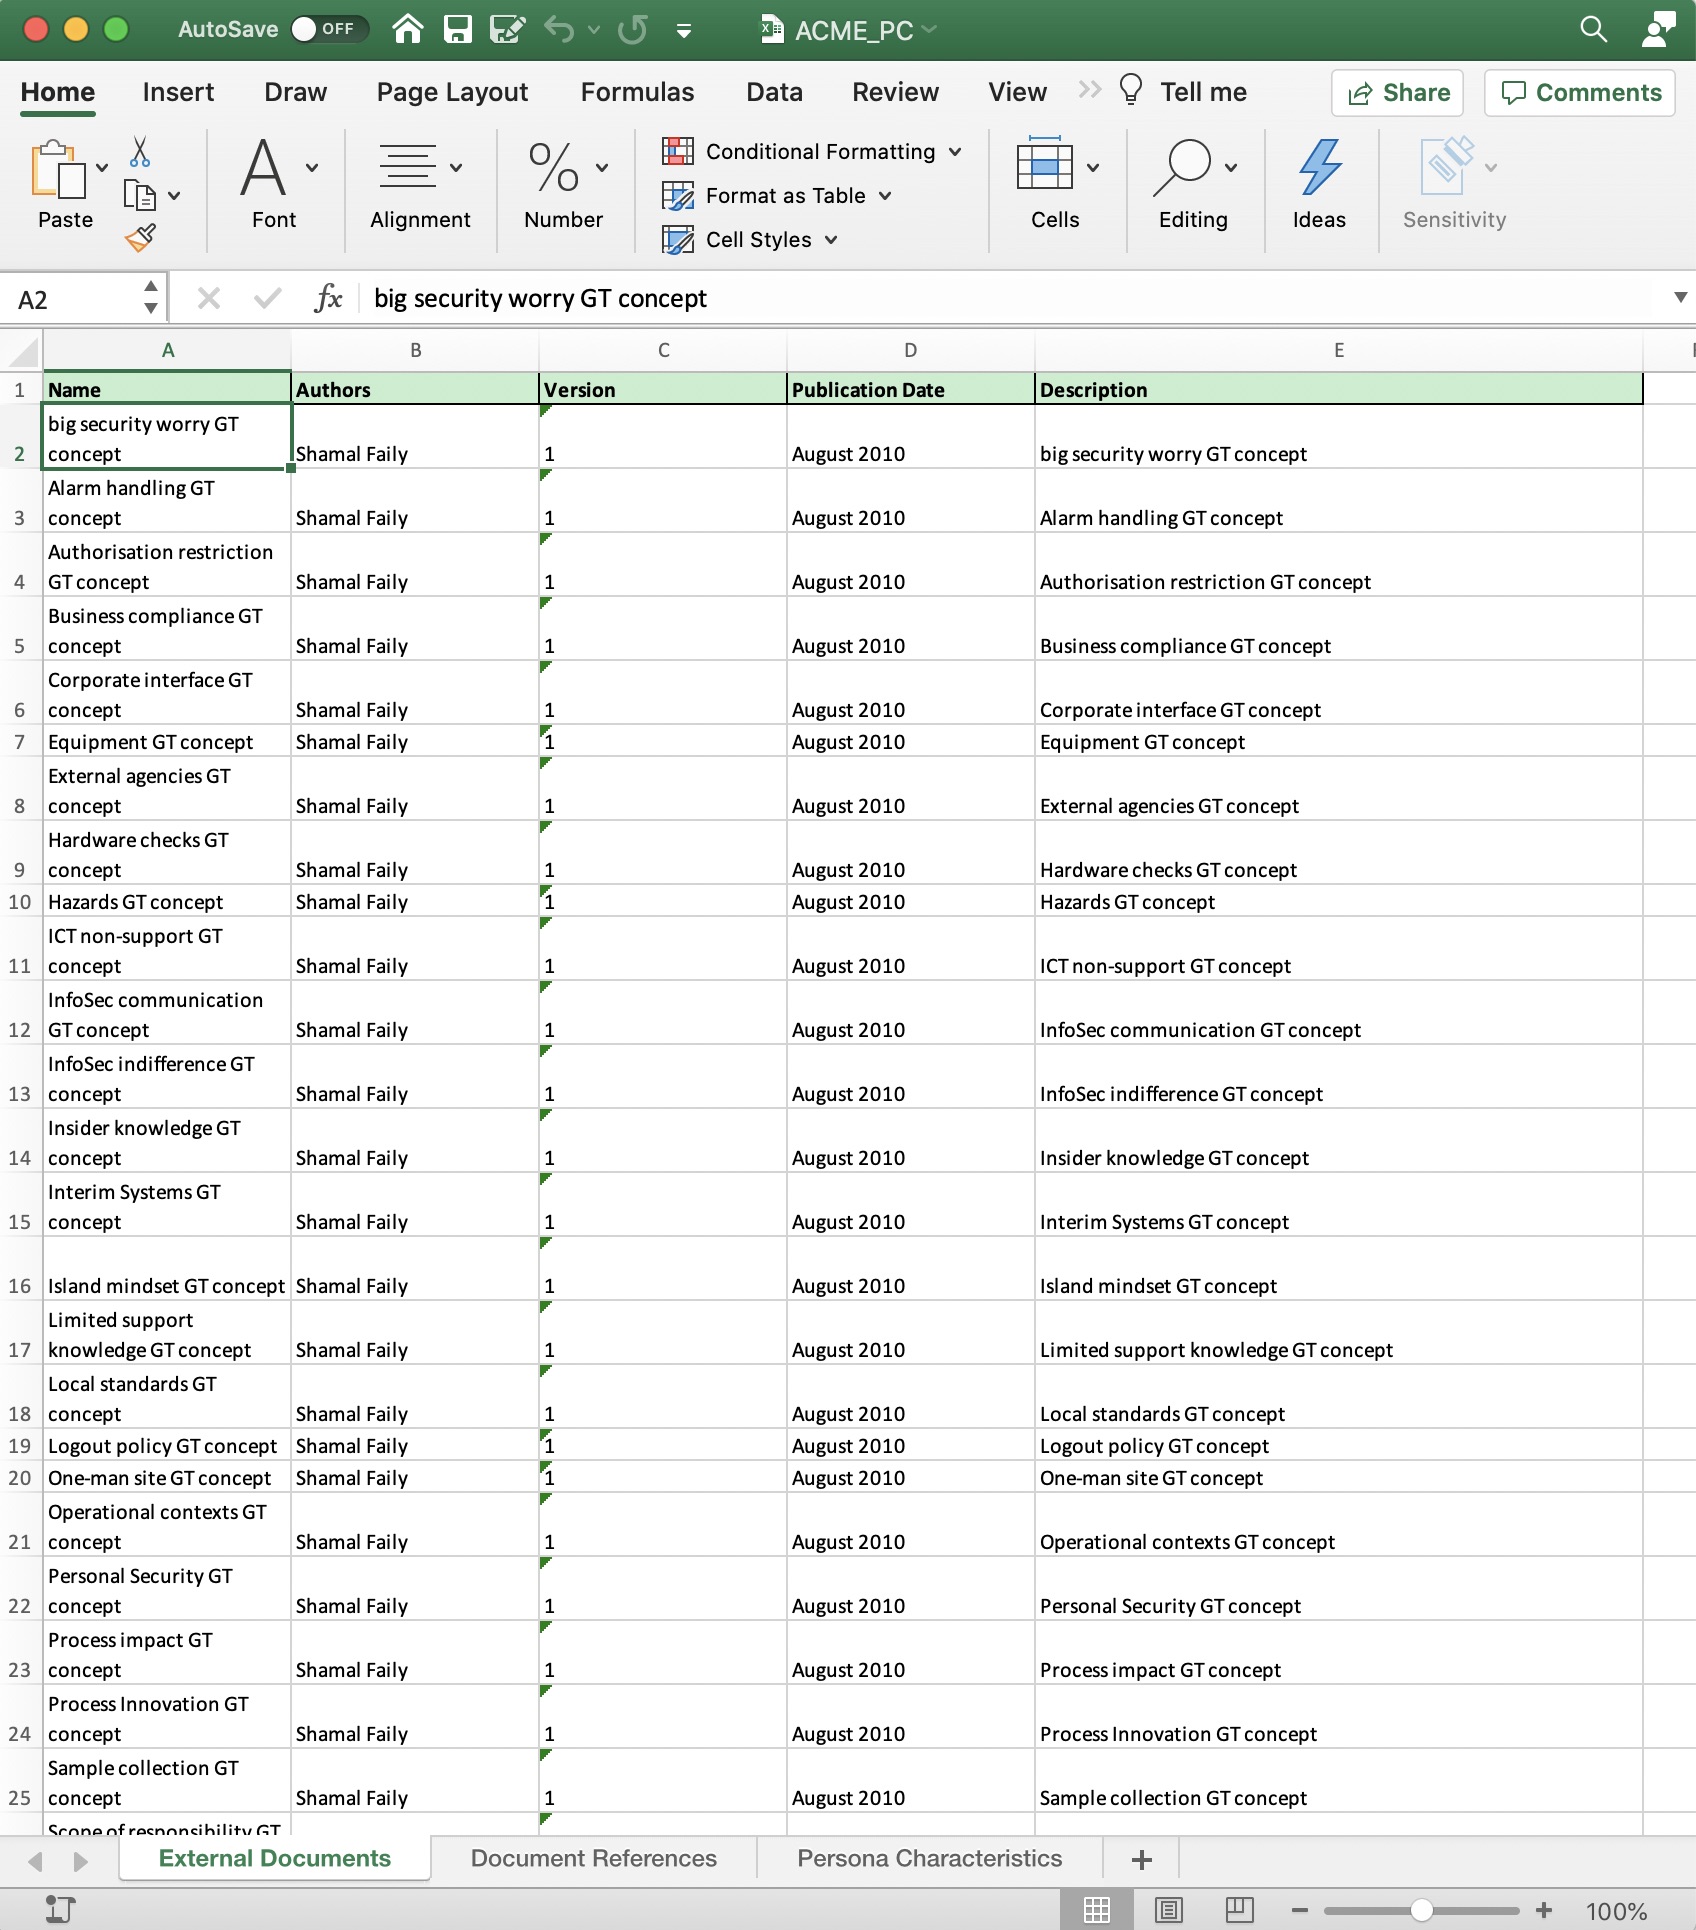 External documents spreadsheet